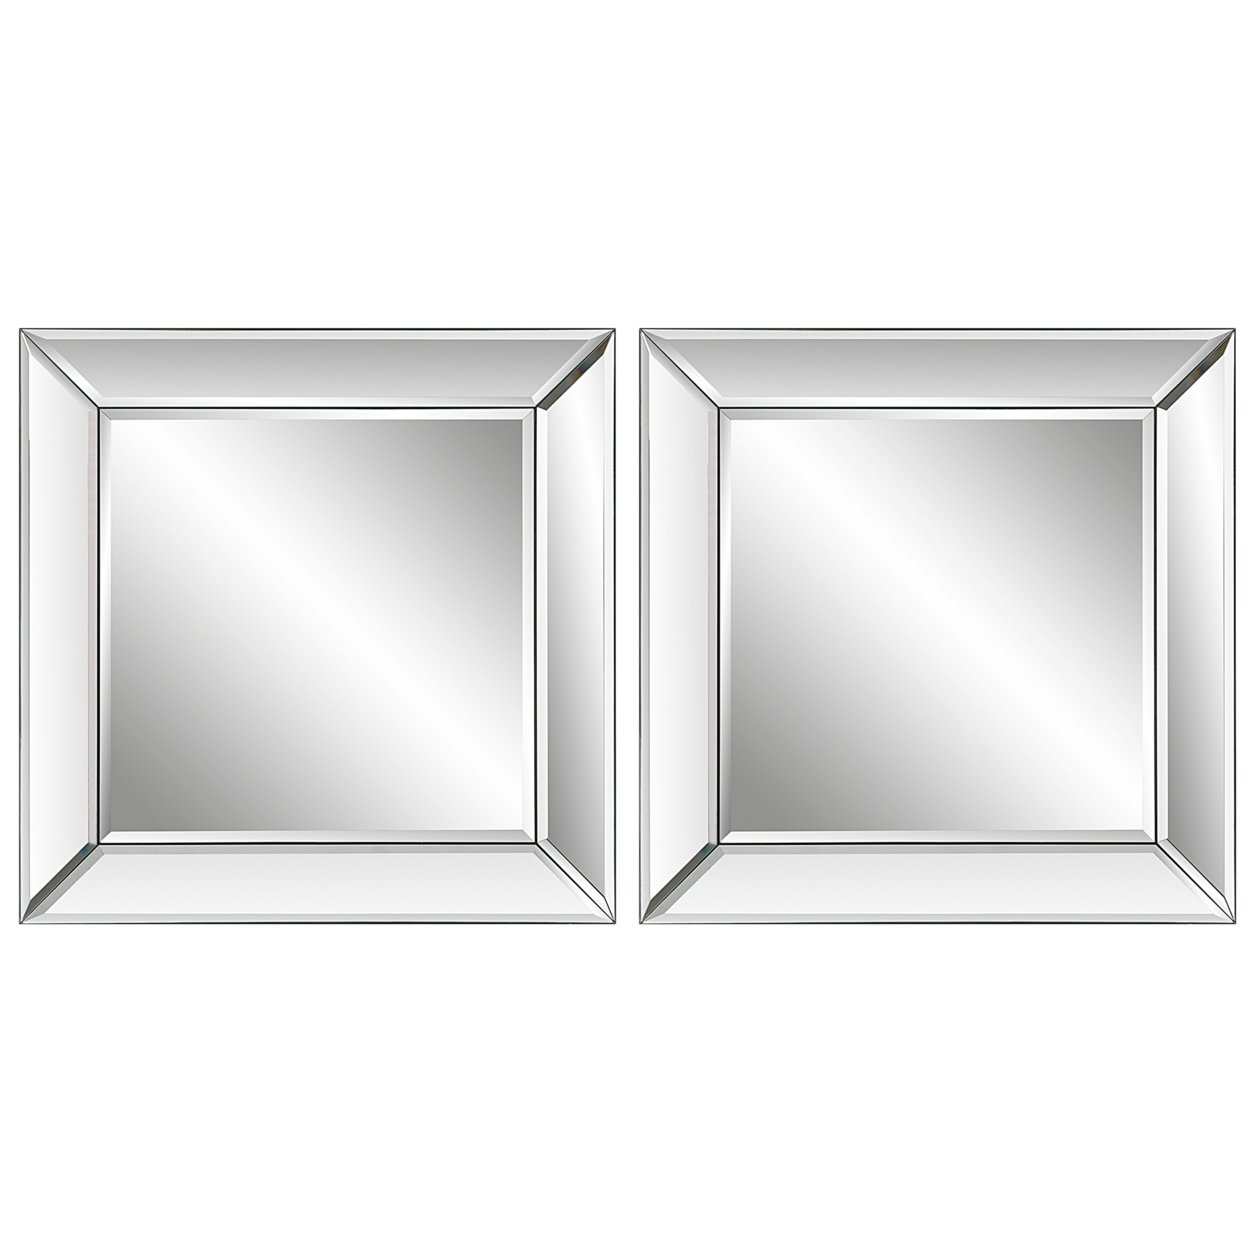 22 X 22 Set Of 2 Square Frameless Mirrors With Bevel Panels, Modern, Chrome- Saltoro Sherpi